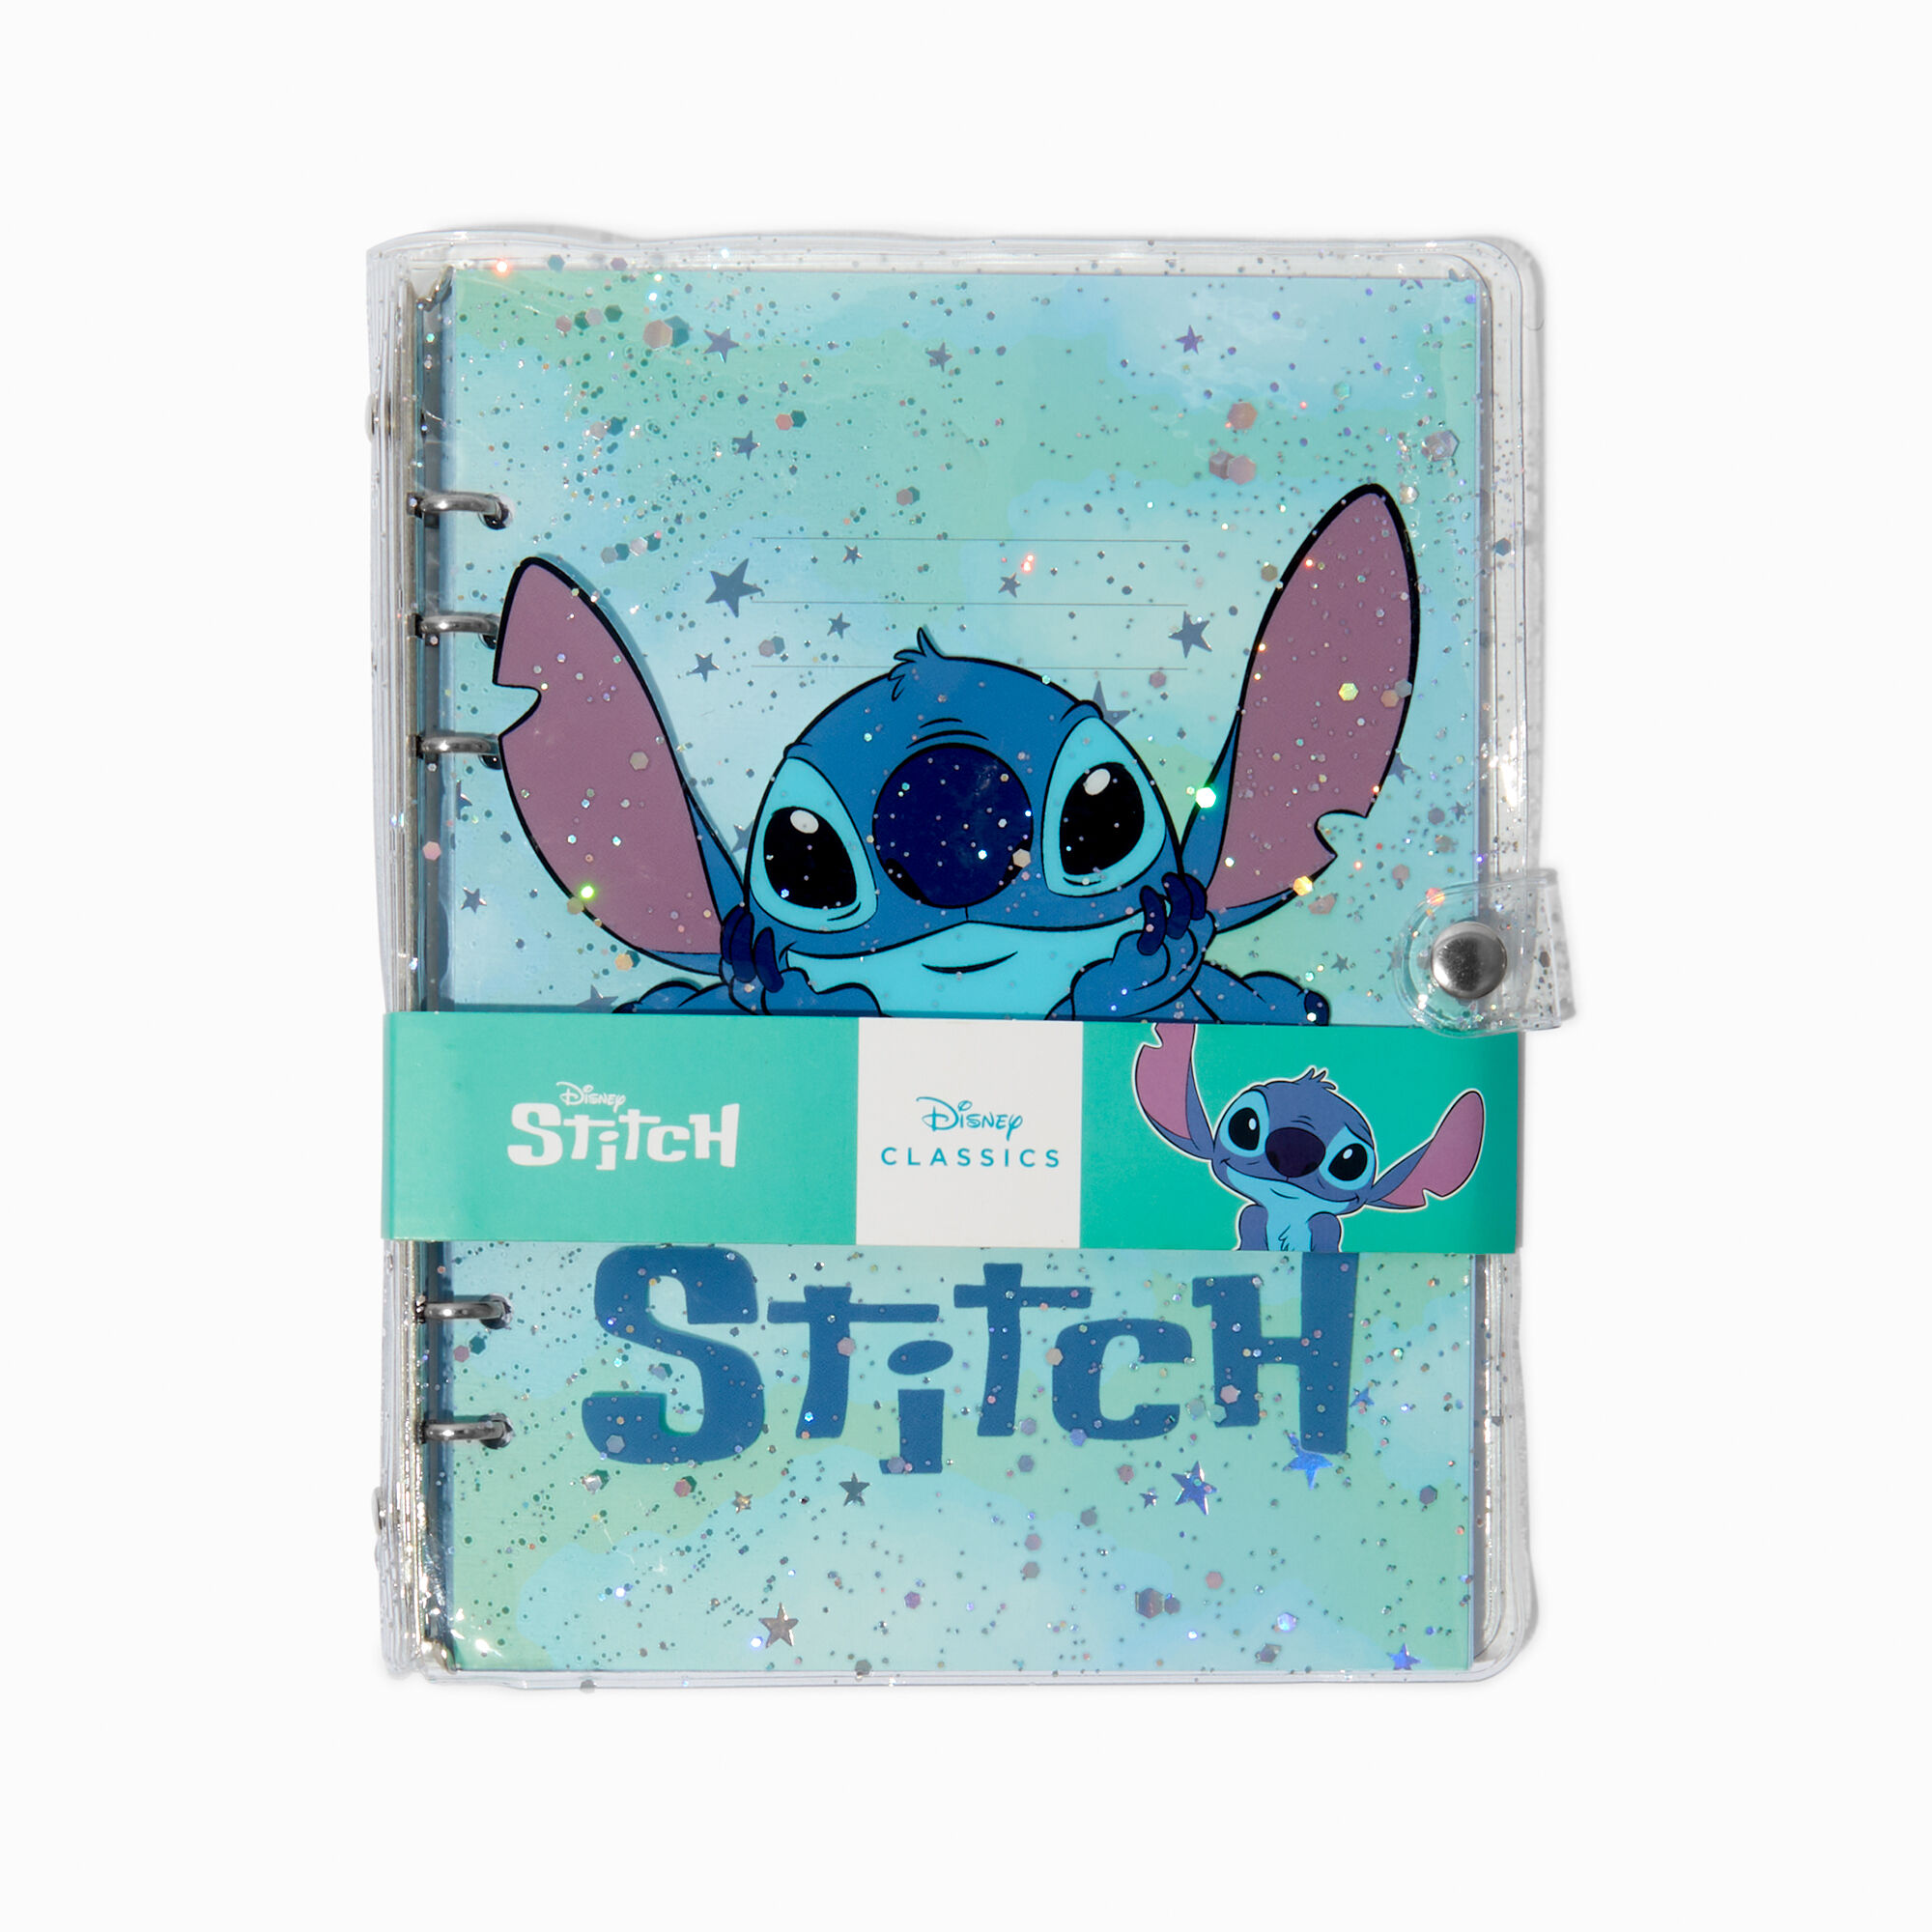 View Claires Disney Stitch Sleepy Shaker Notebook information